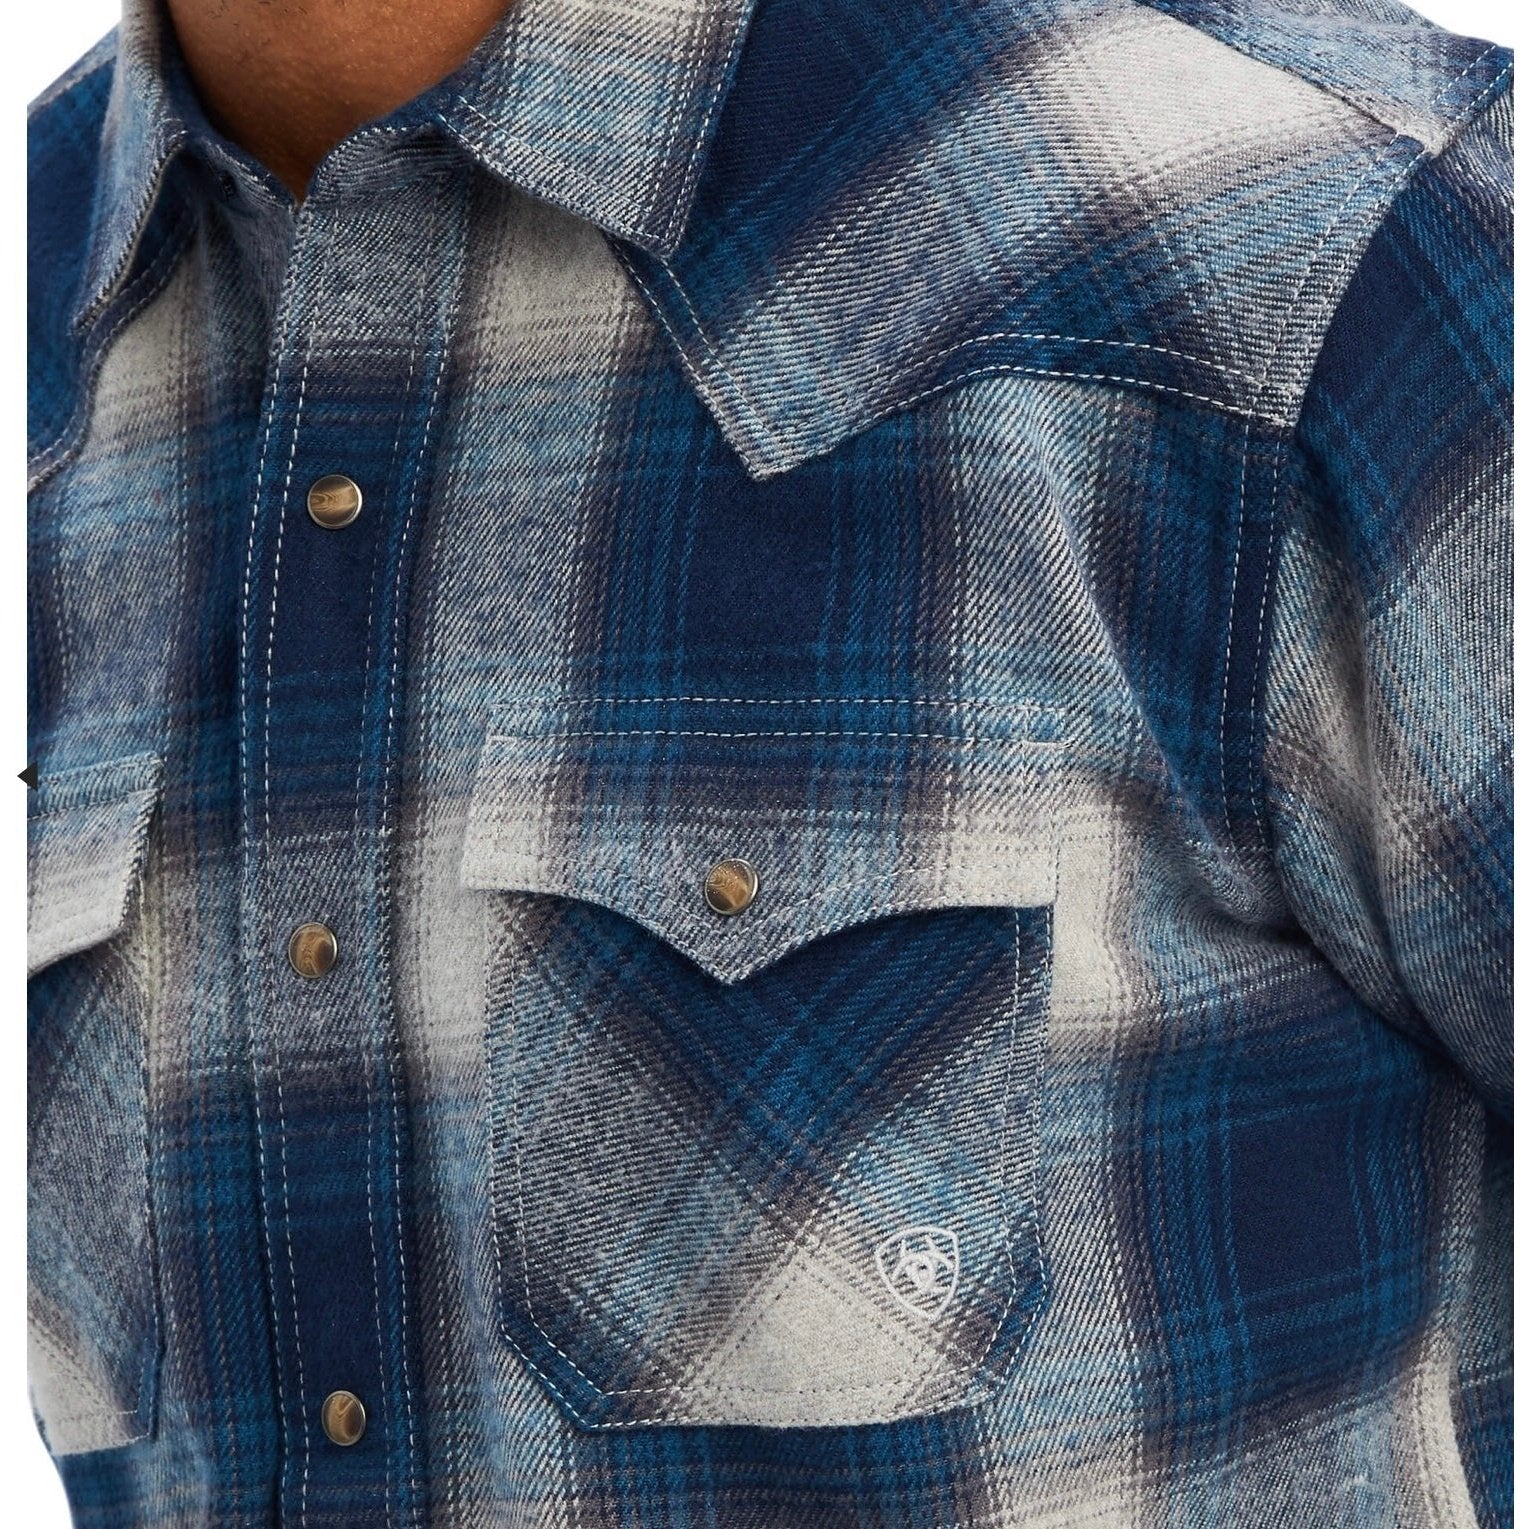 Ariat Men’s Button Up Flannel Shirt 10041774 - Ariat